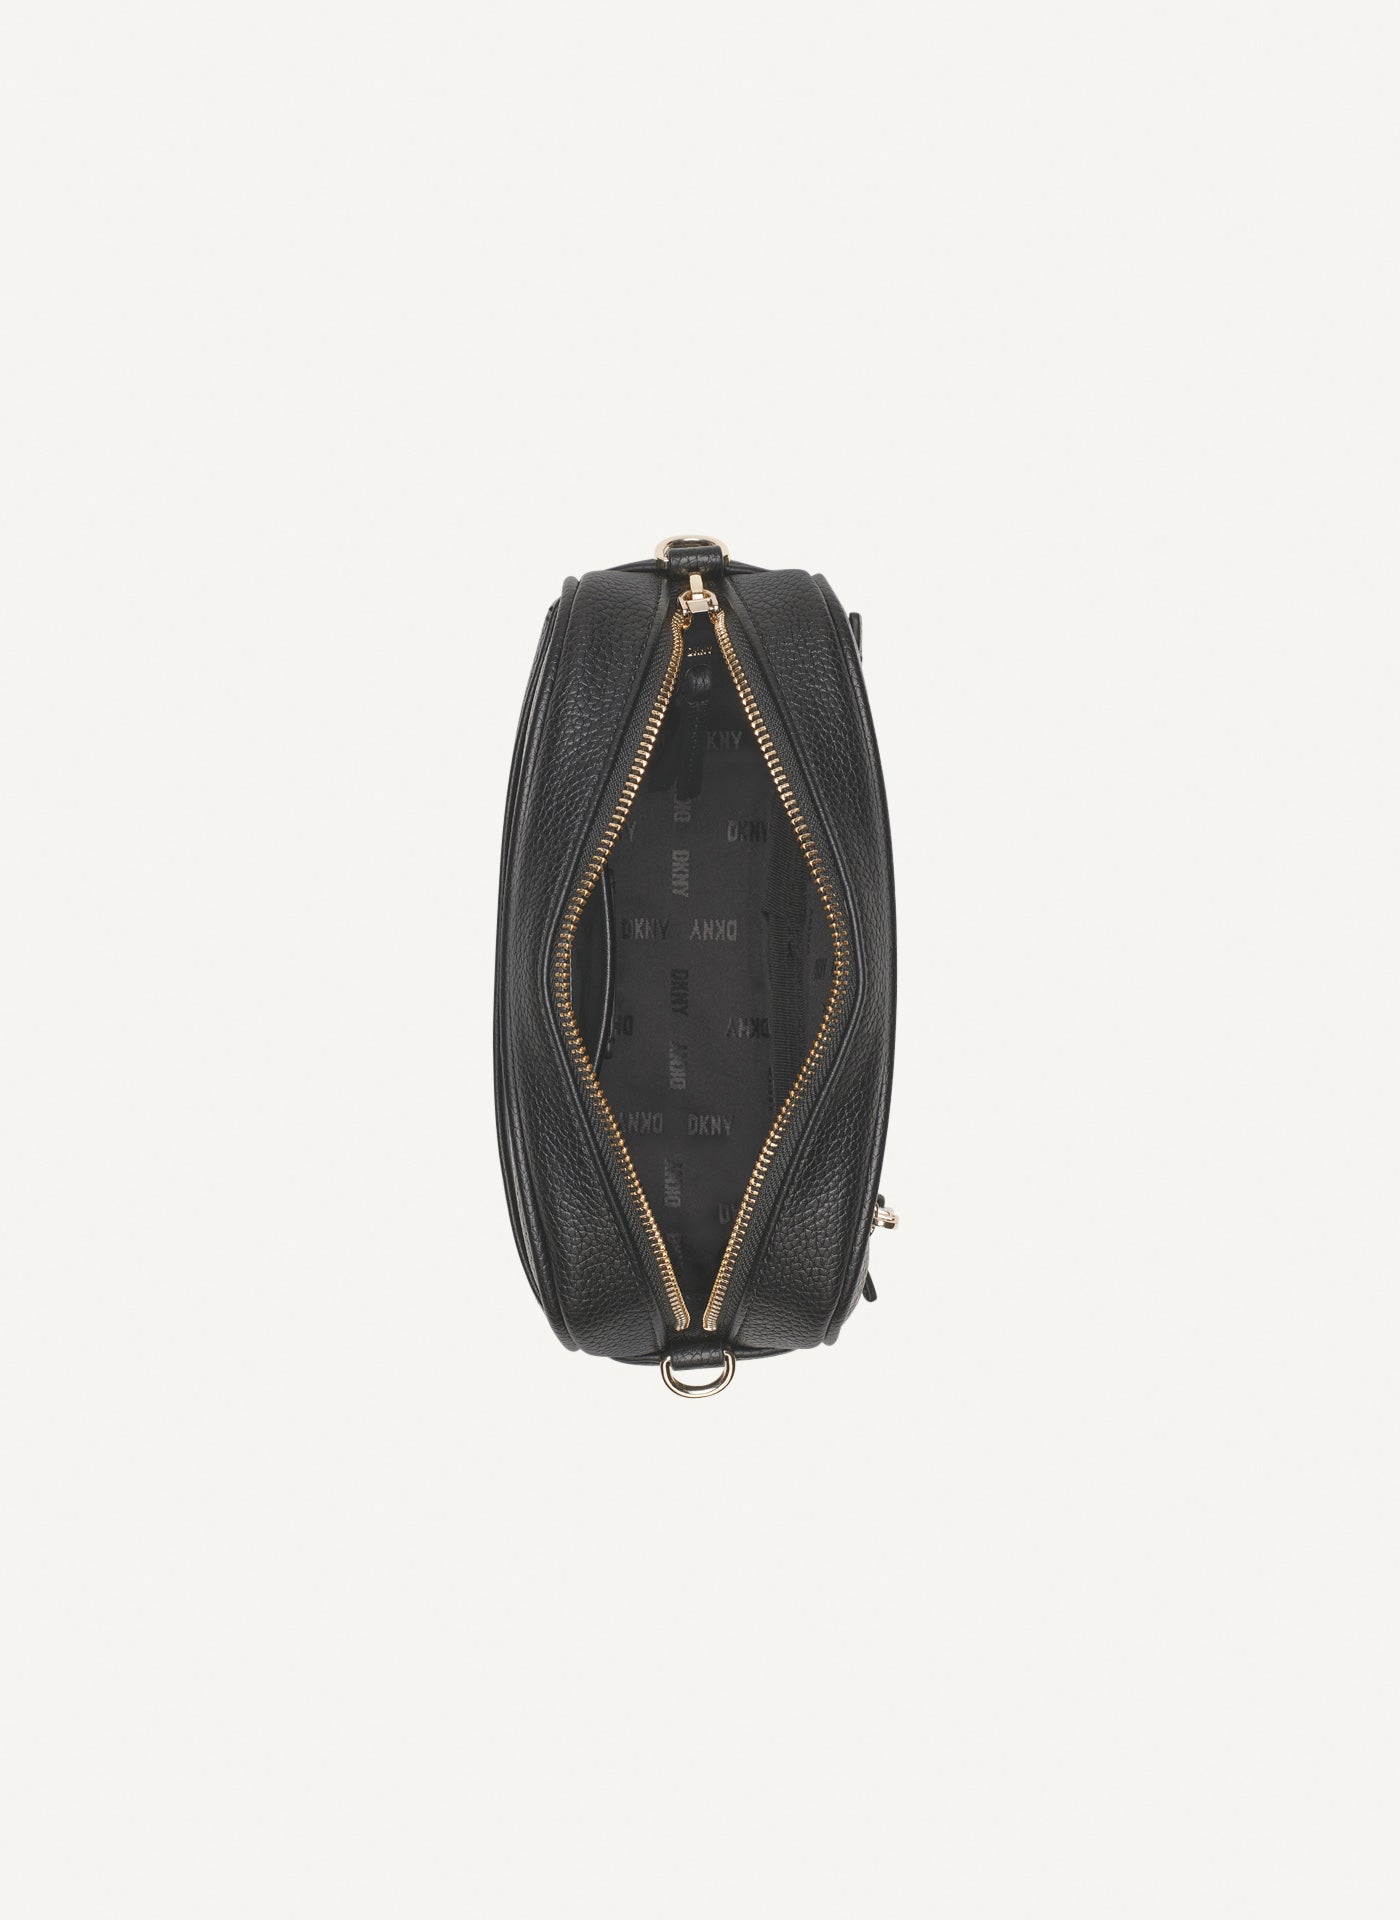 DKNY purse handbag black - clothing & accessories - by owner - apparel sale  - craigslist